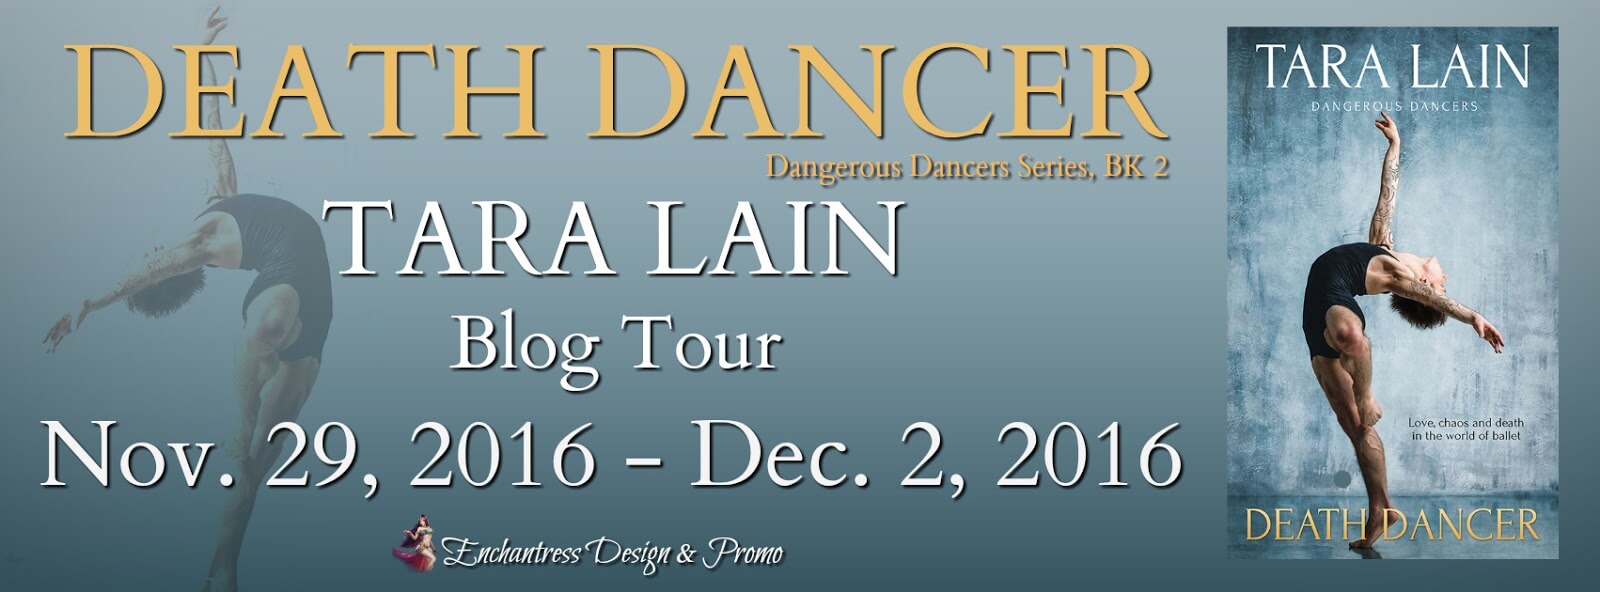 Blogtour Review: Death Dancer - Tara Lain